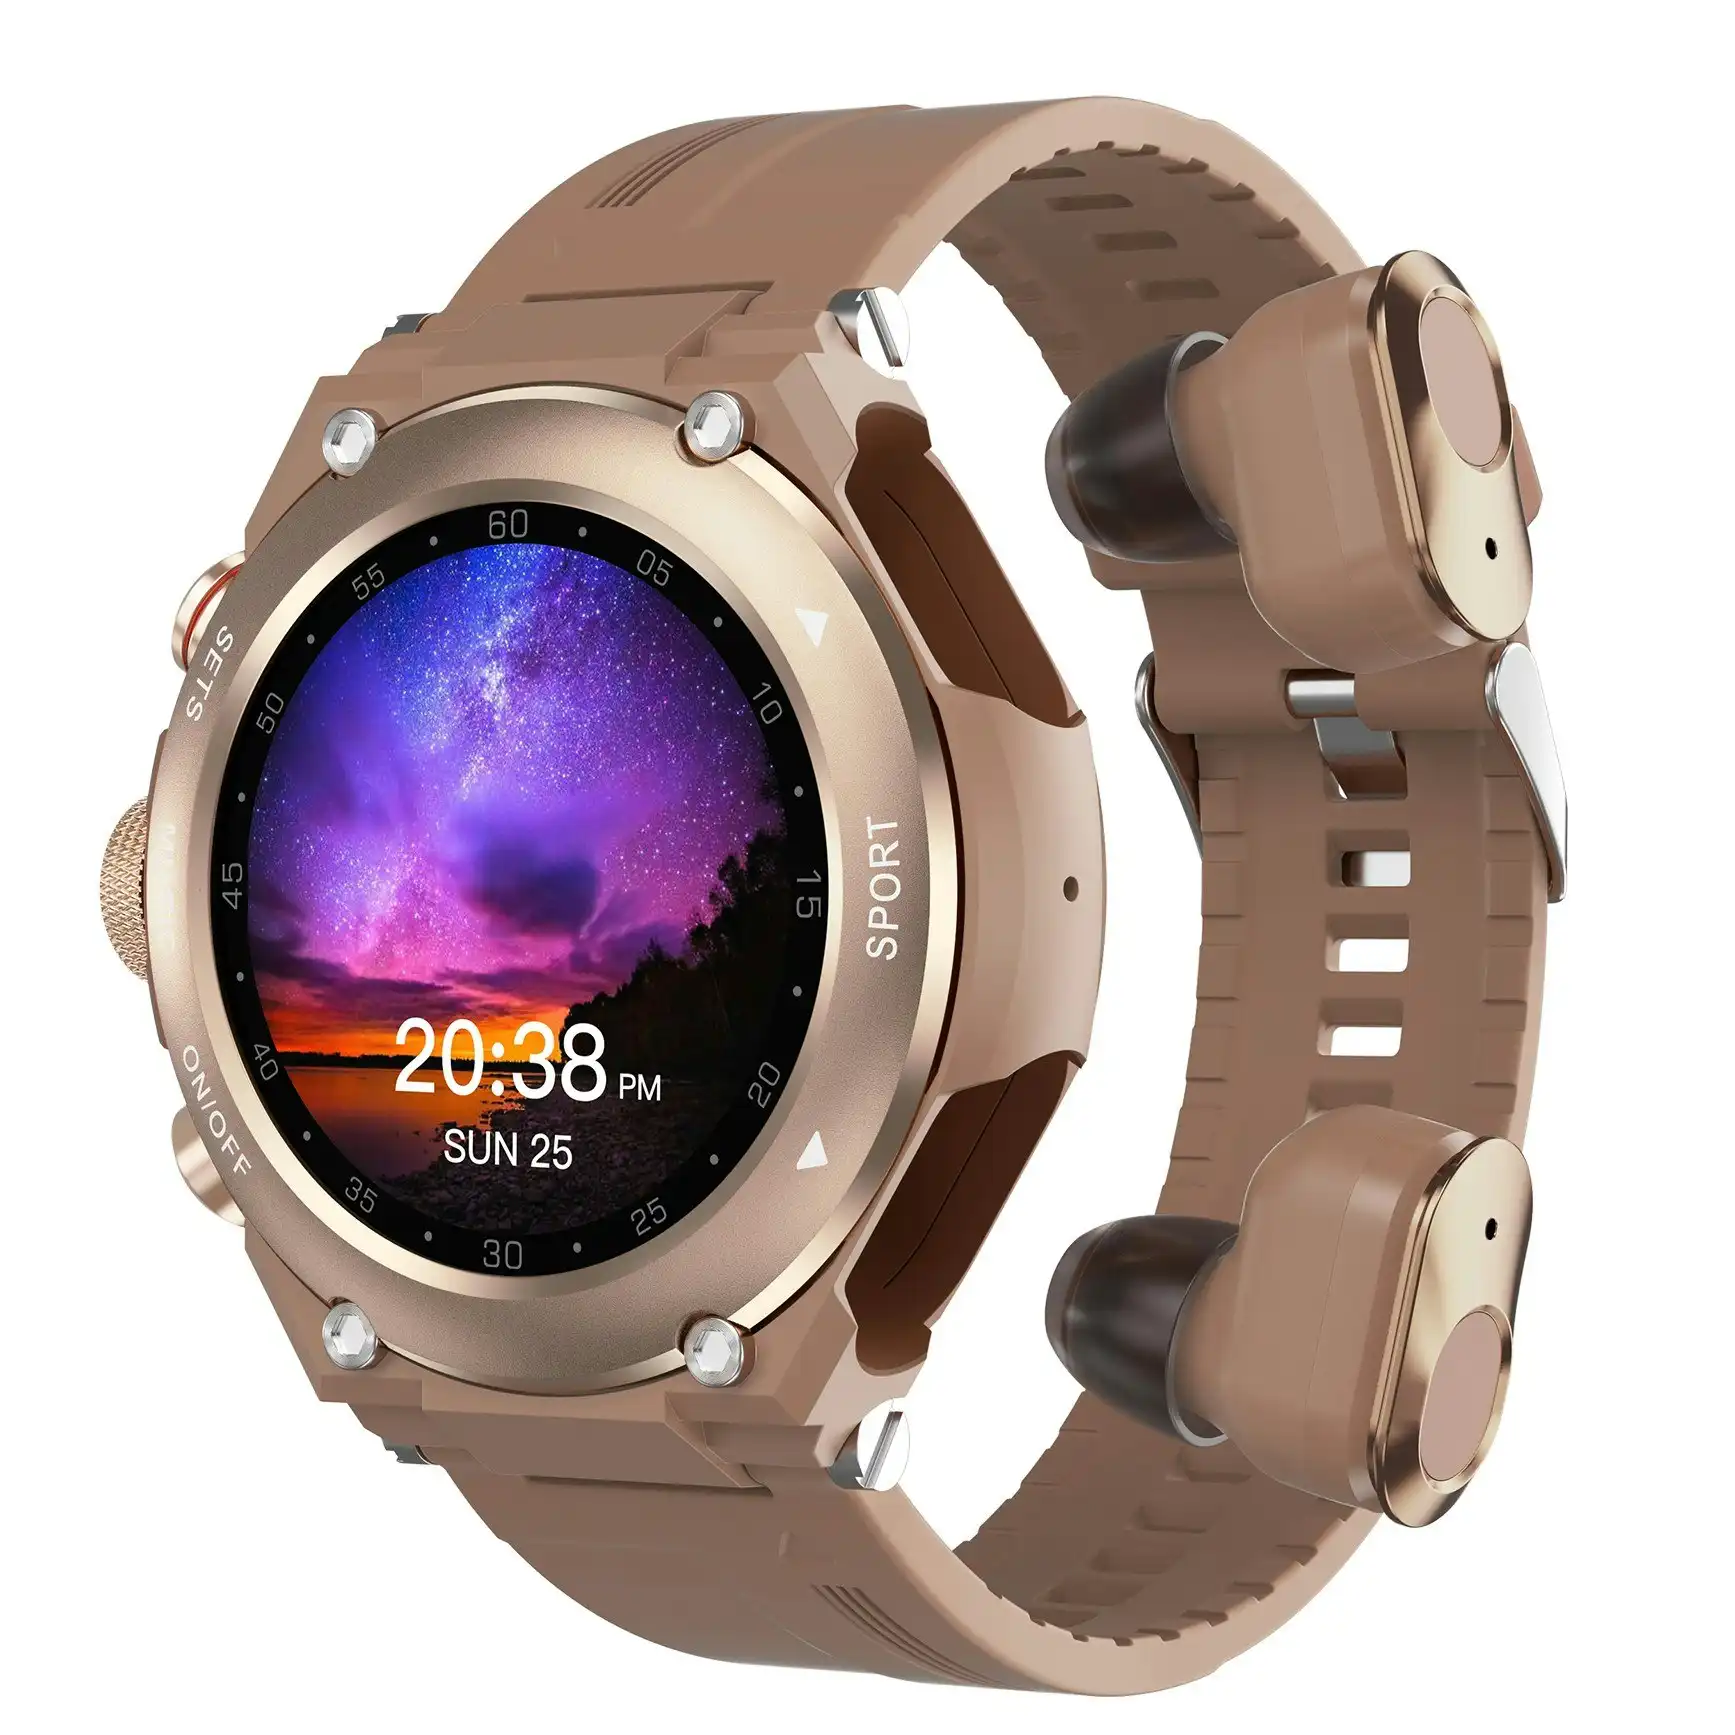 2 in 1 Bluetooth Smart Watch TWS Wireless Earphones 1.28" 9D Touch Screen BT 5.0 - Brown